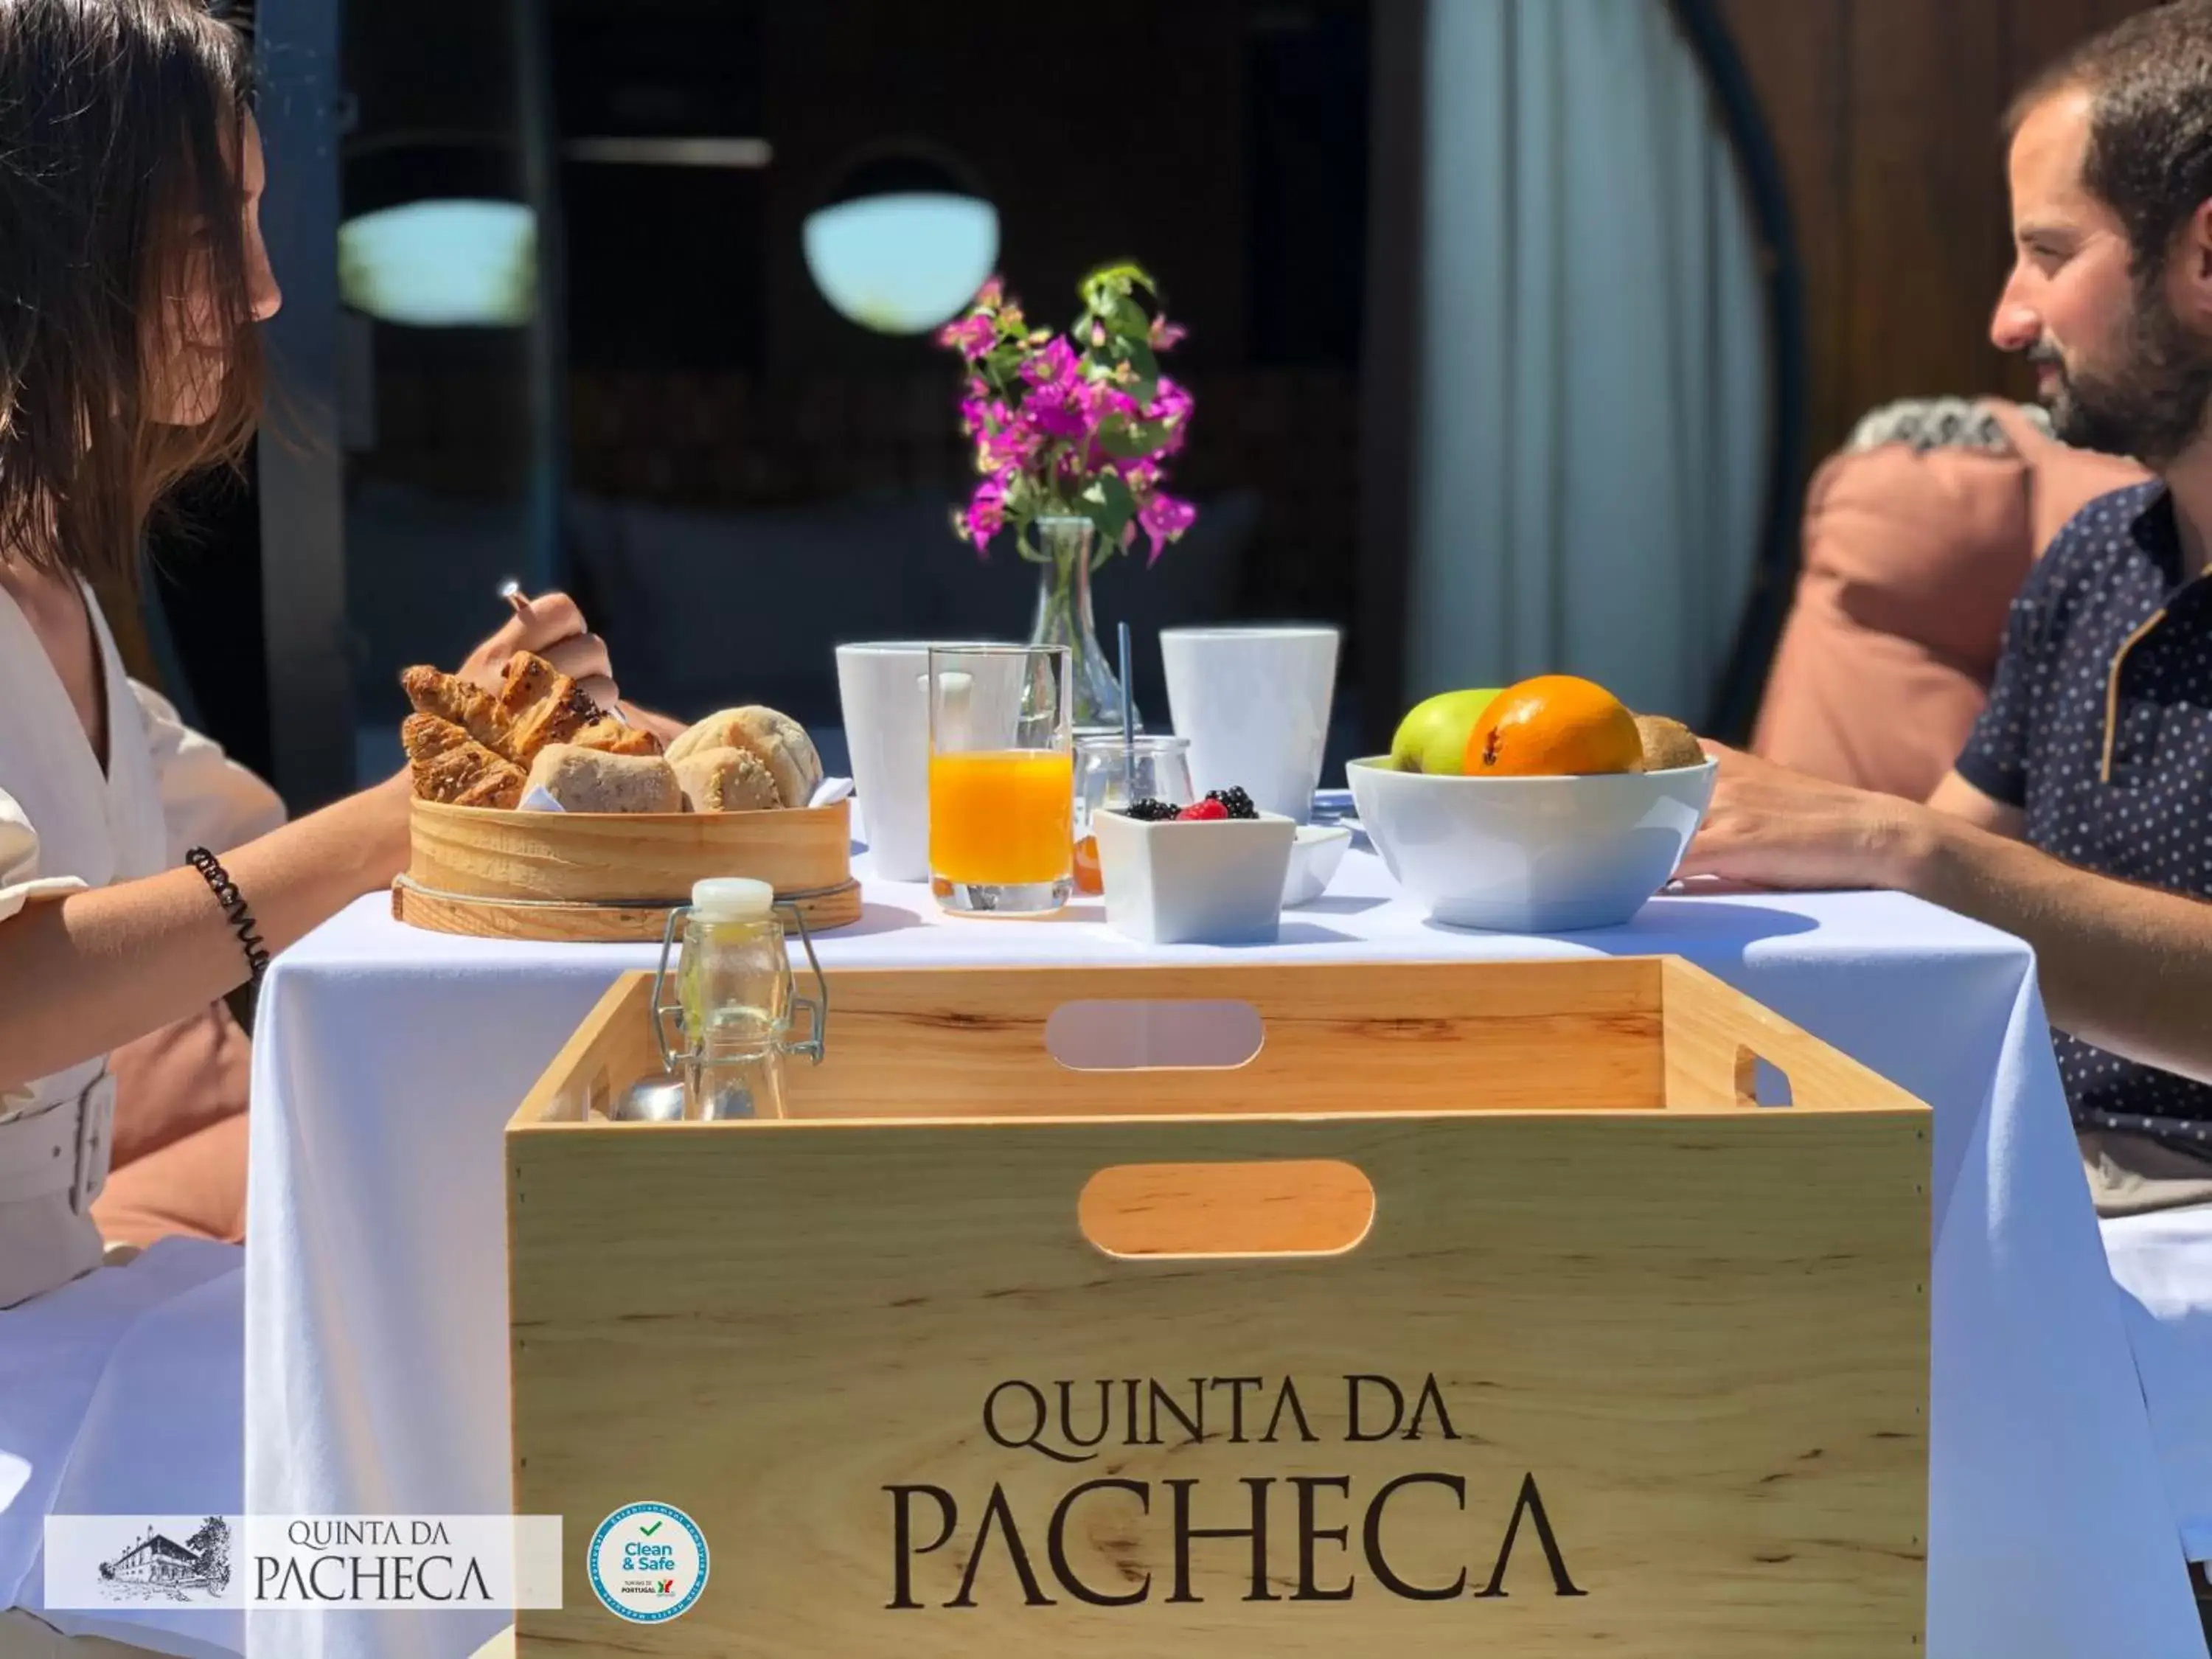 Continental breakfast in The Wine House Hotel - Quinta da Pacheca